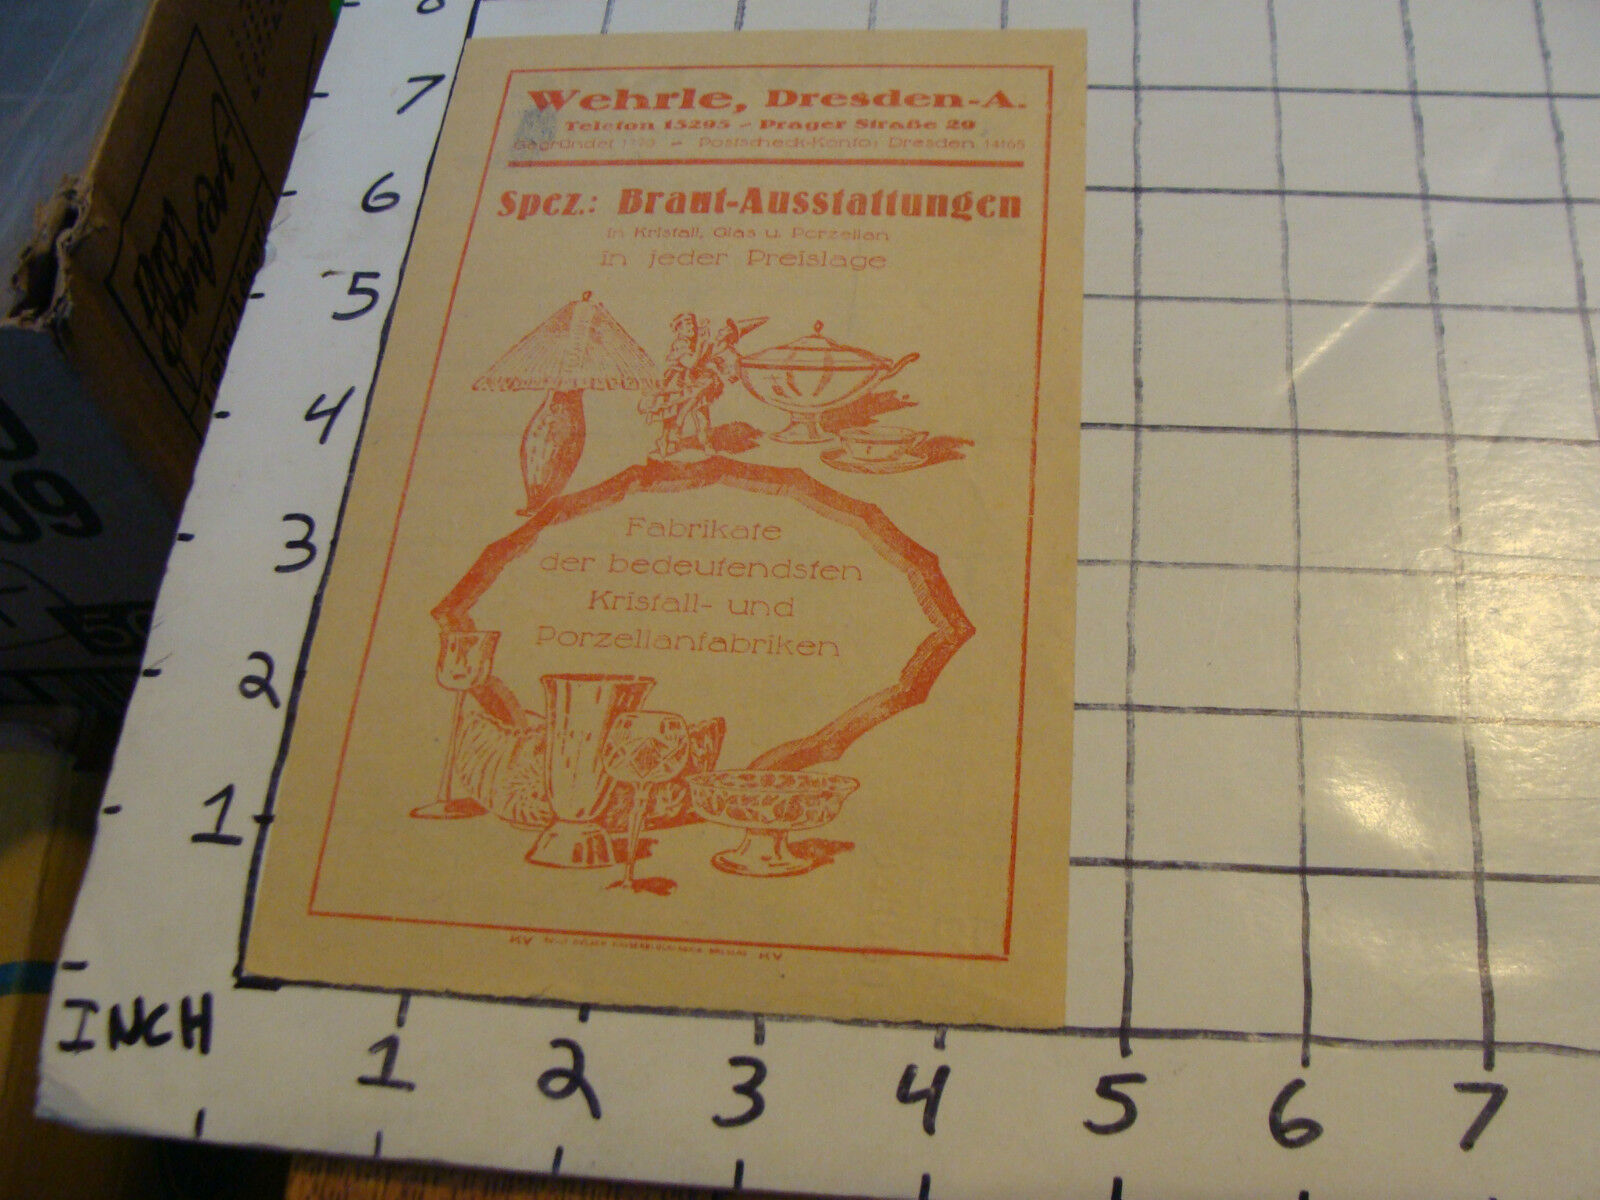 Vintage paper: WEHRLE, Dresden, receipt, text in German